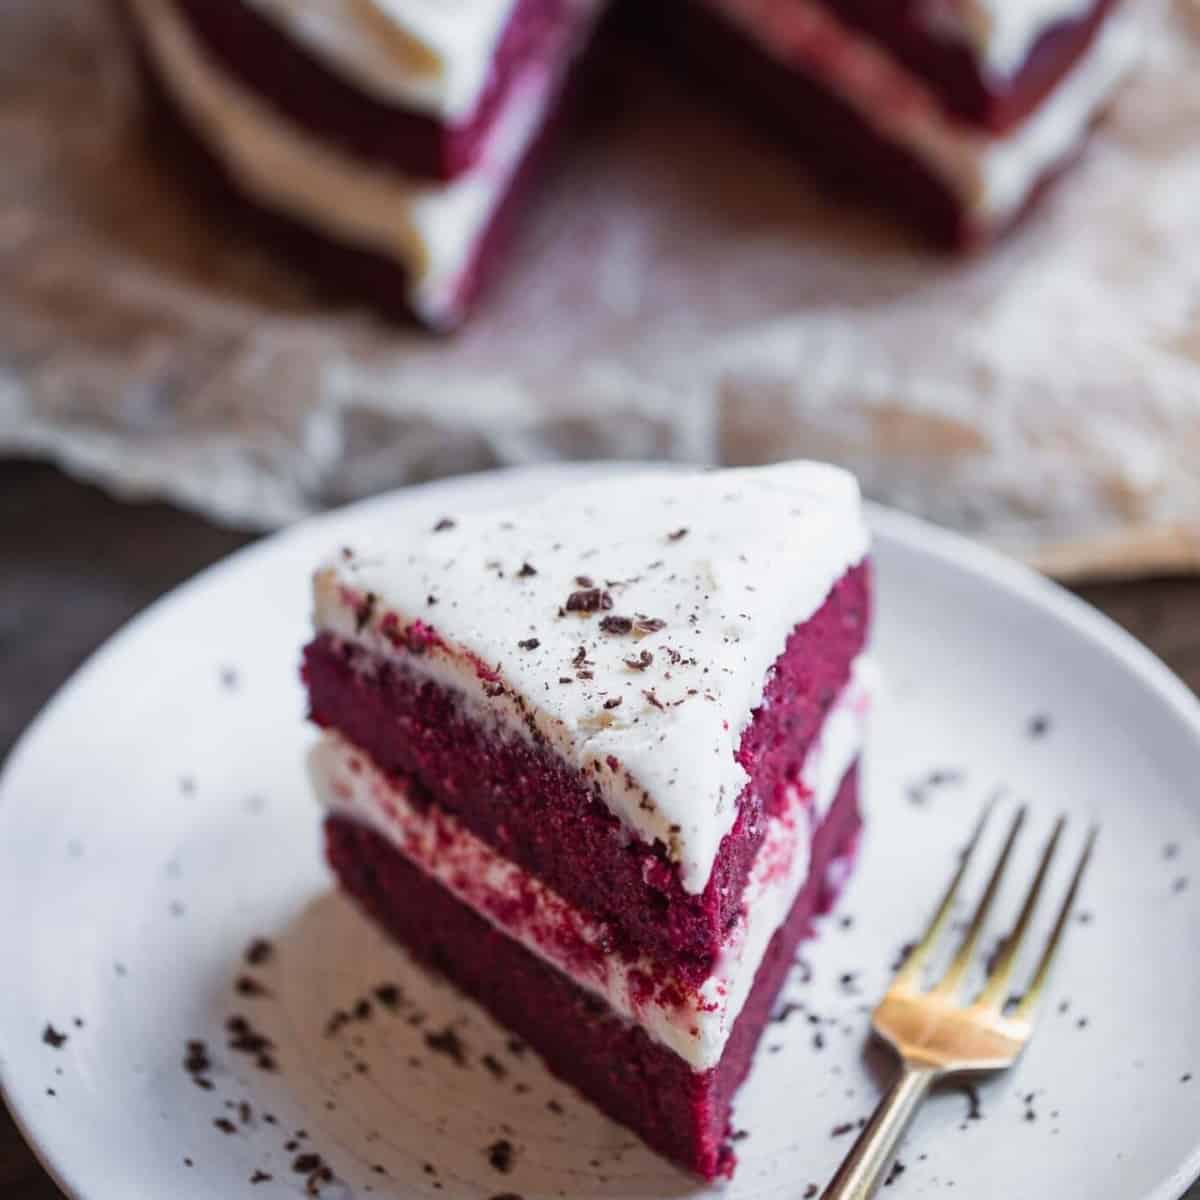 25+ Vegan Valentine’s Day Desserts